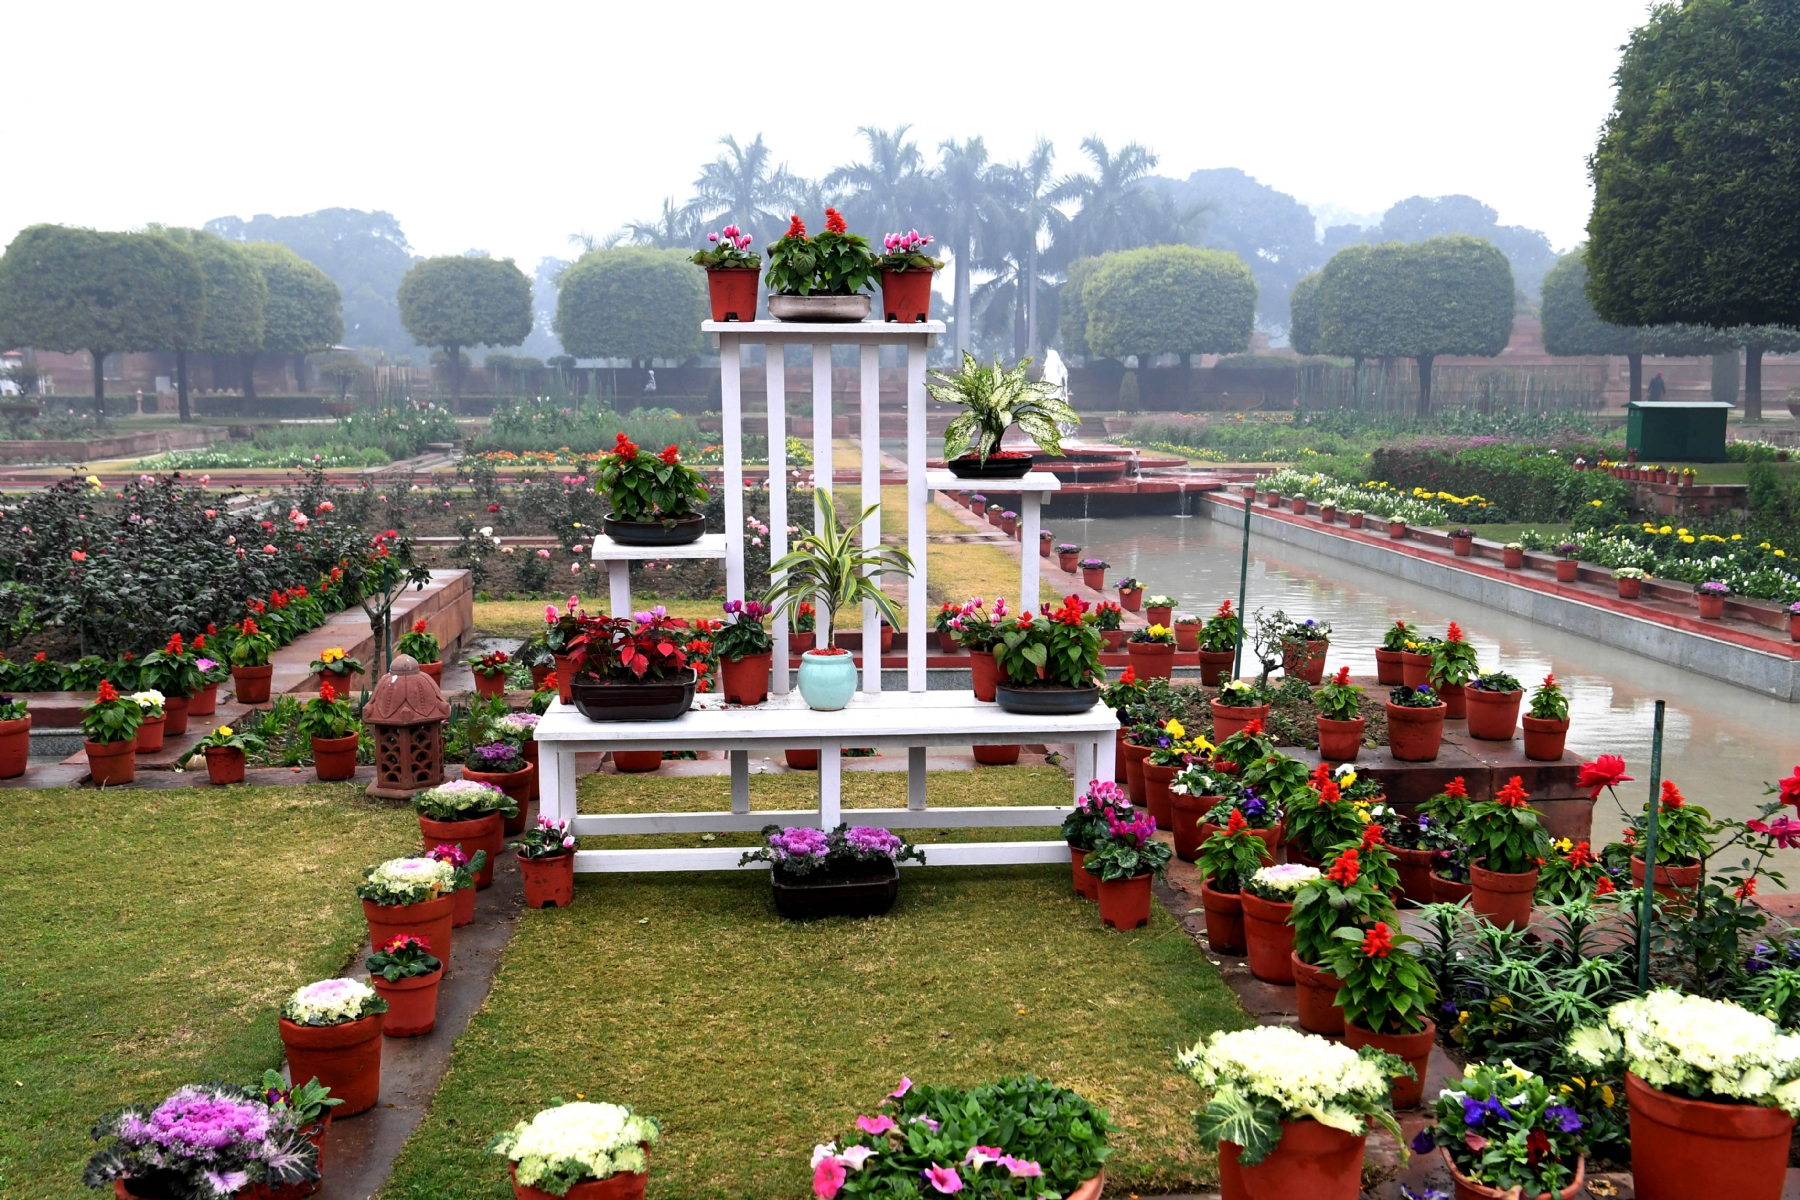 राष्ट्रपति श्रीमती द्रौपदी मुर्मू ने अमृत उद्यान फरवरी से जनता के लिए खुला फोटो गणेश बिष्ट